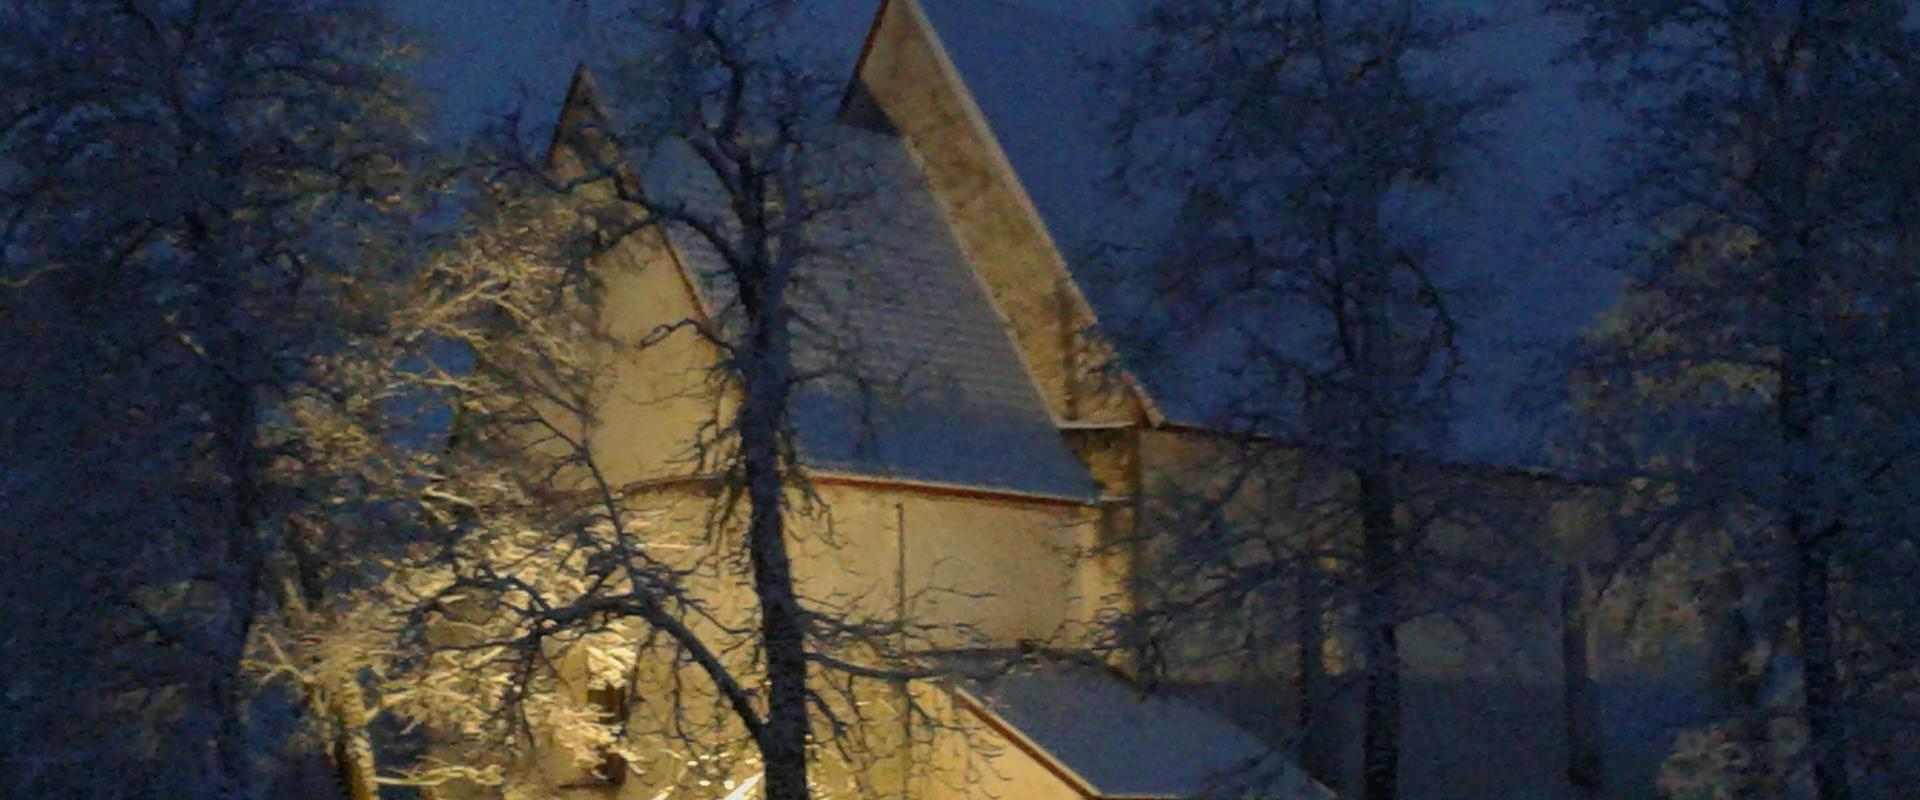 Die Kirche in Ridala